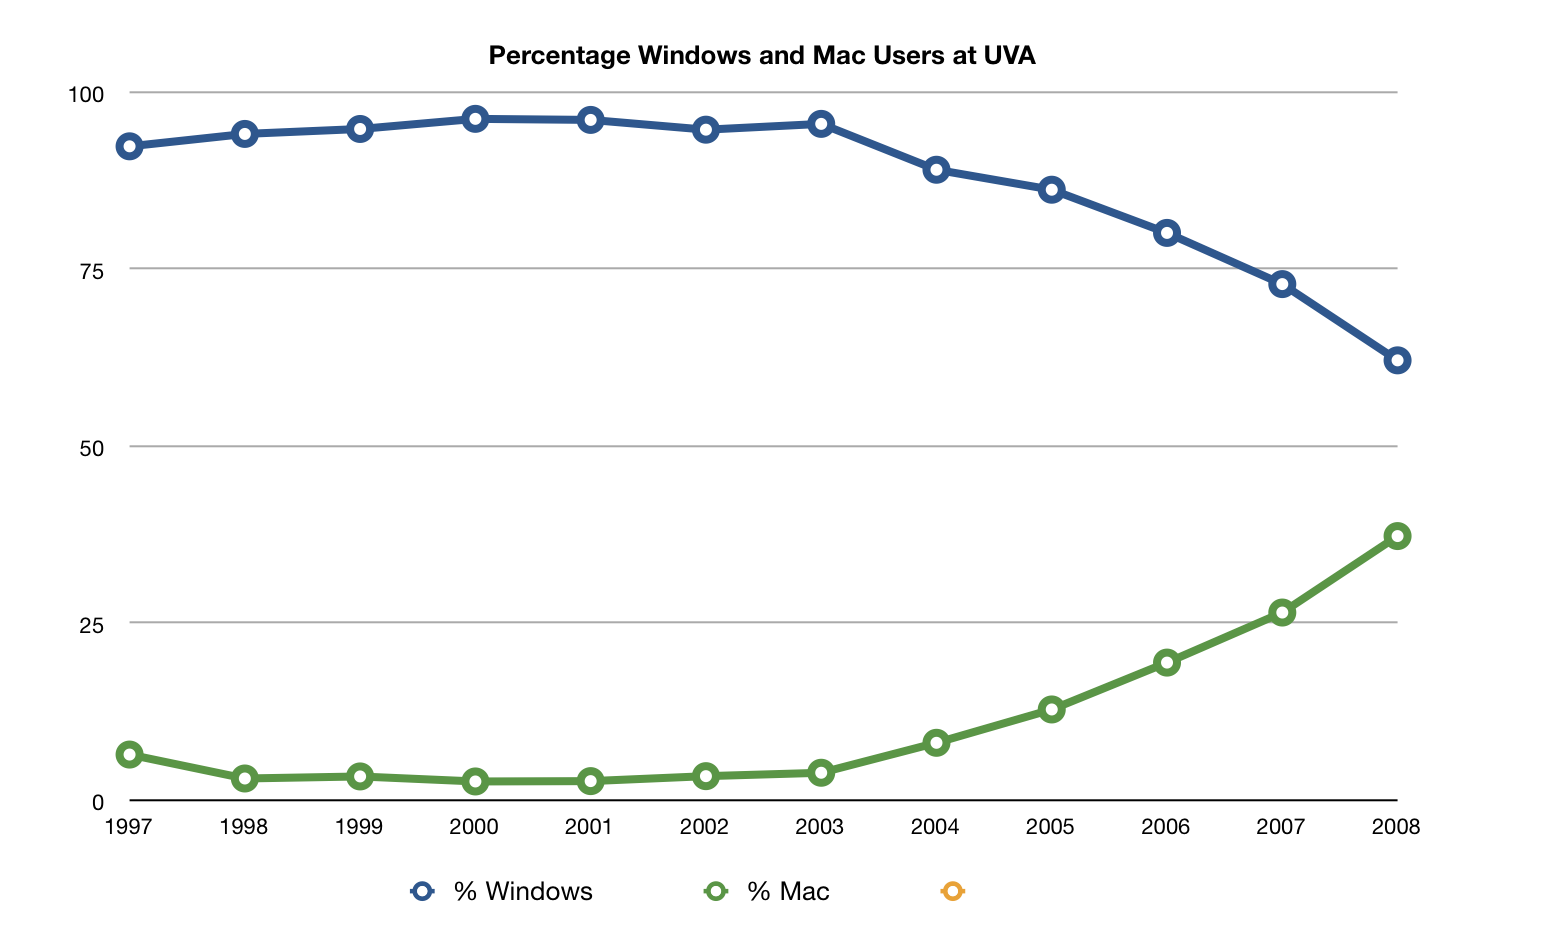 Windows and Mac Percentage at UVA